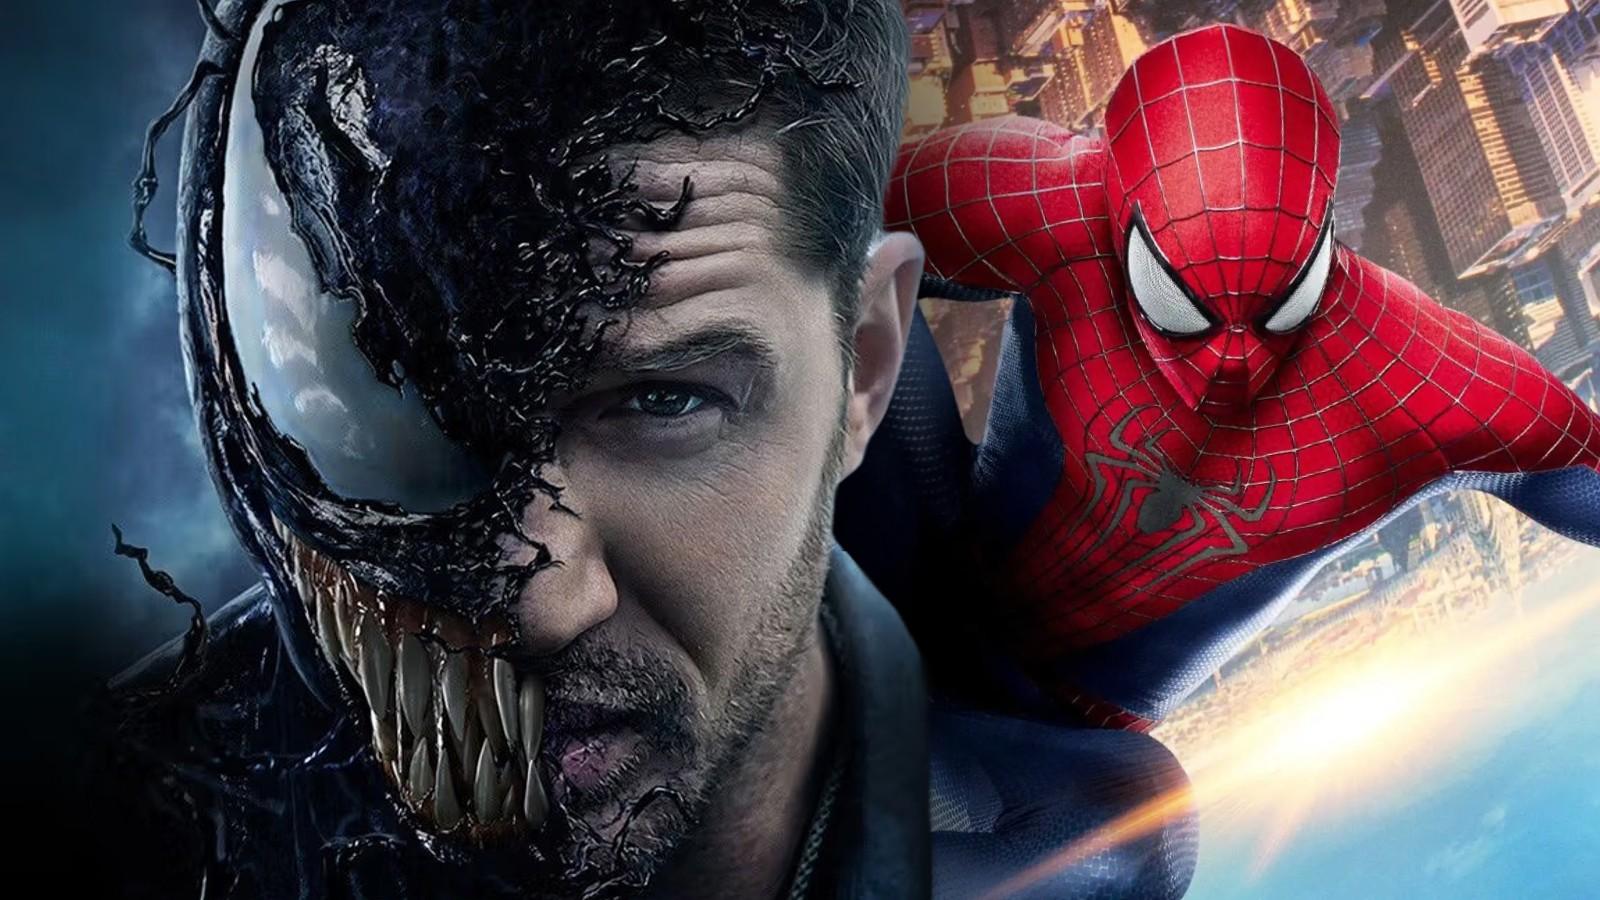 Tom Hardy as Venom and Spider-Man